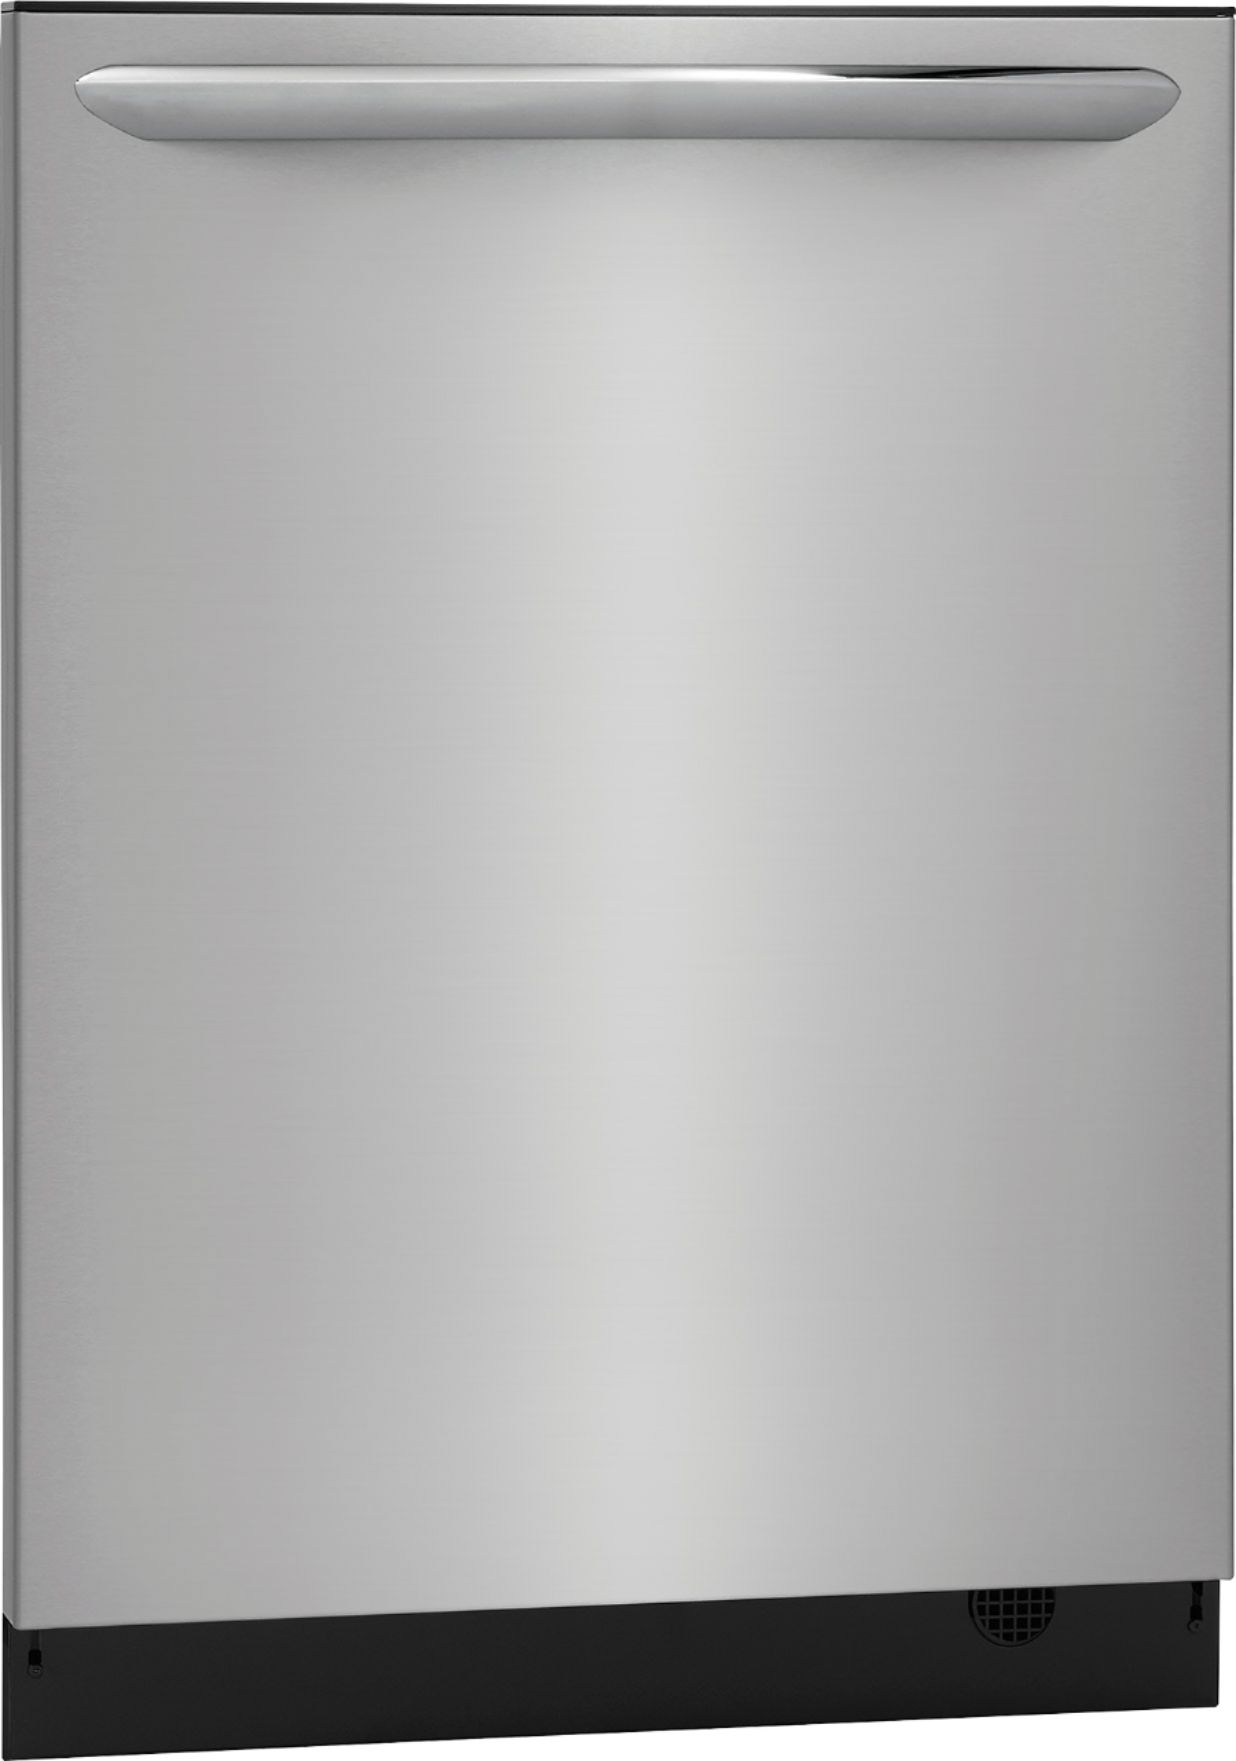 frigidaire stainless steel dishwasher